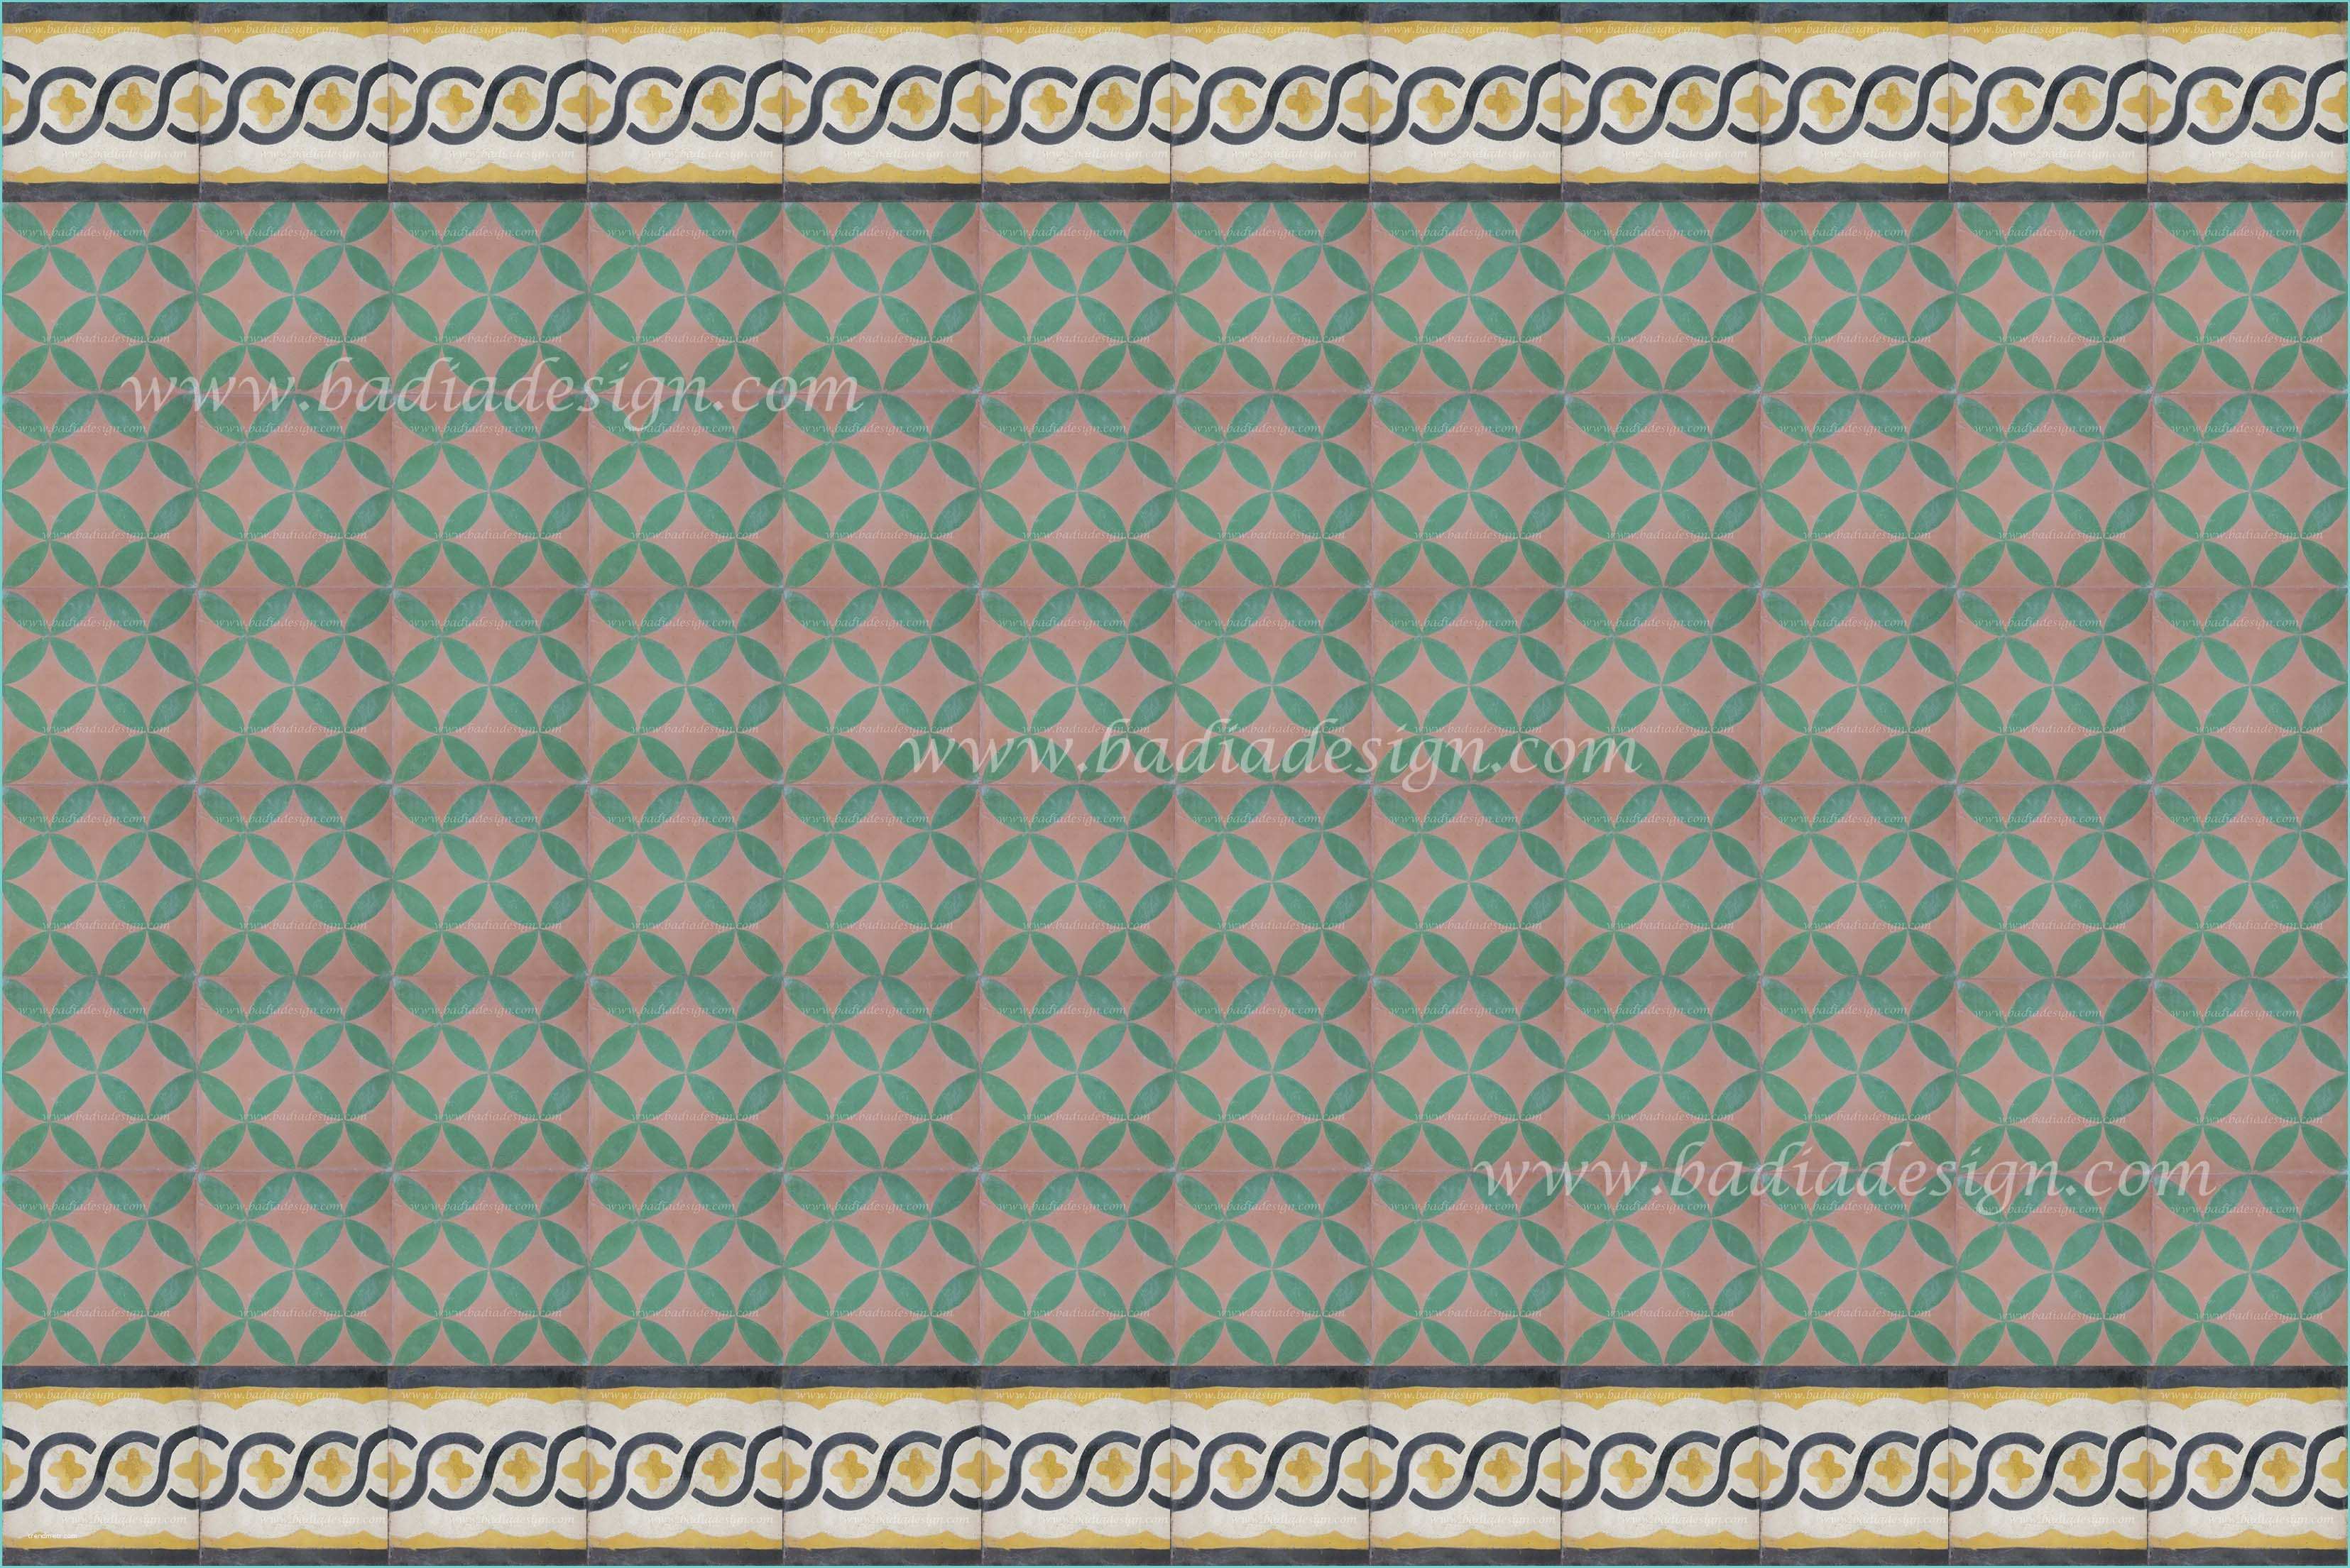 Morroccan Floor Tiles Border Tiles